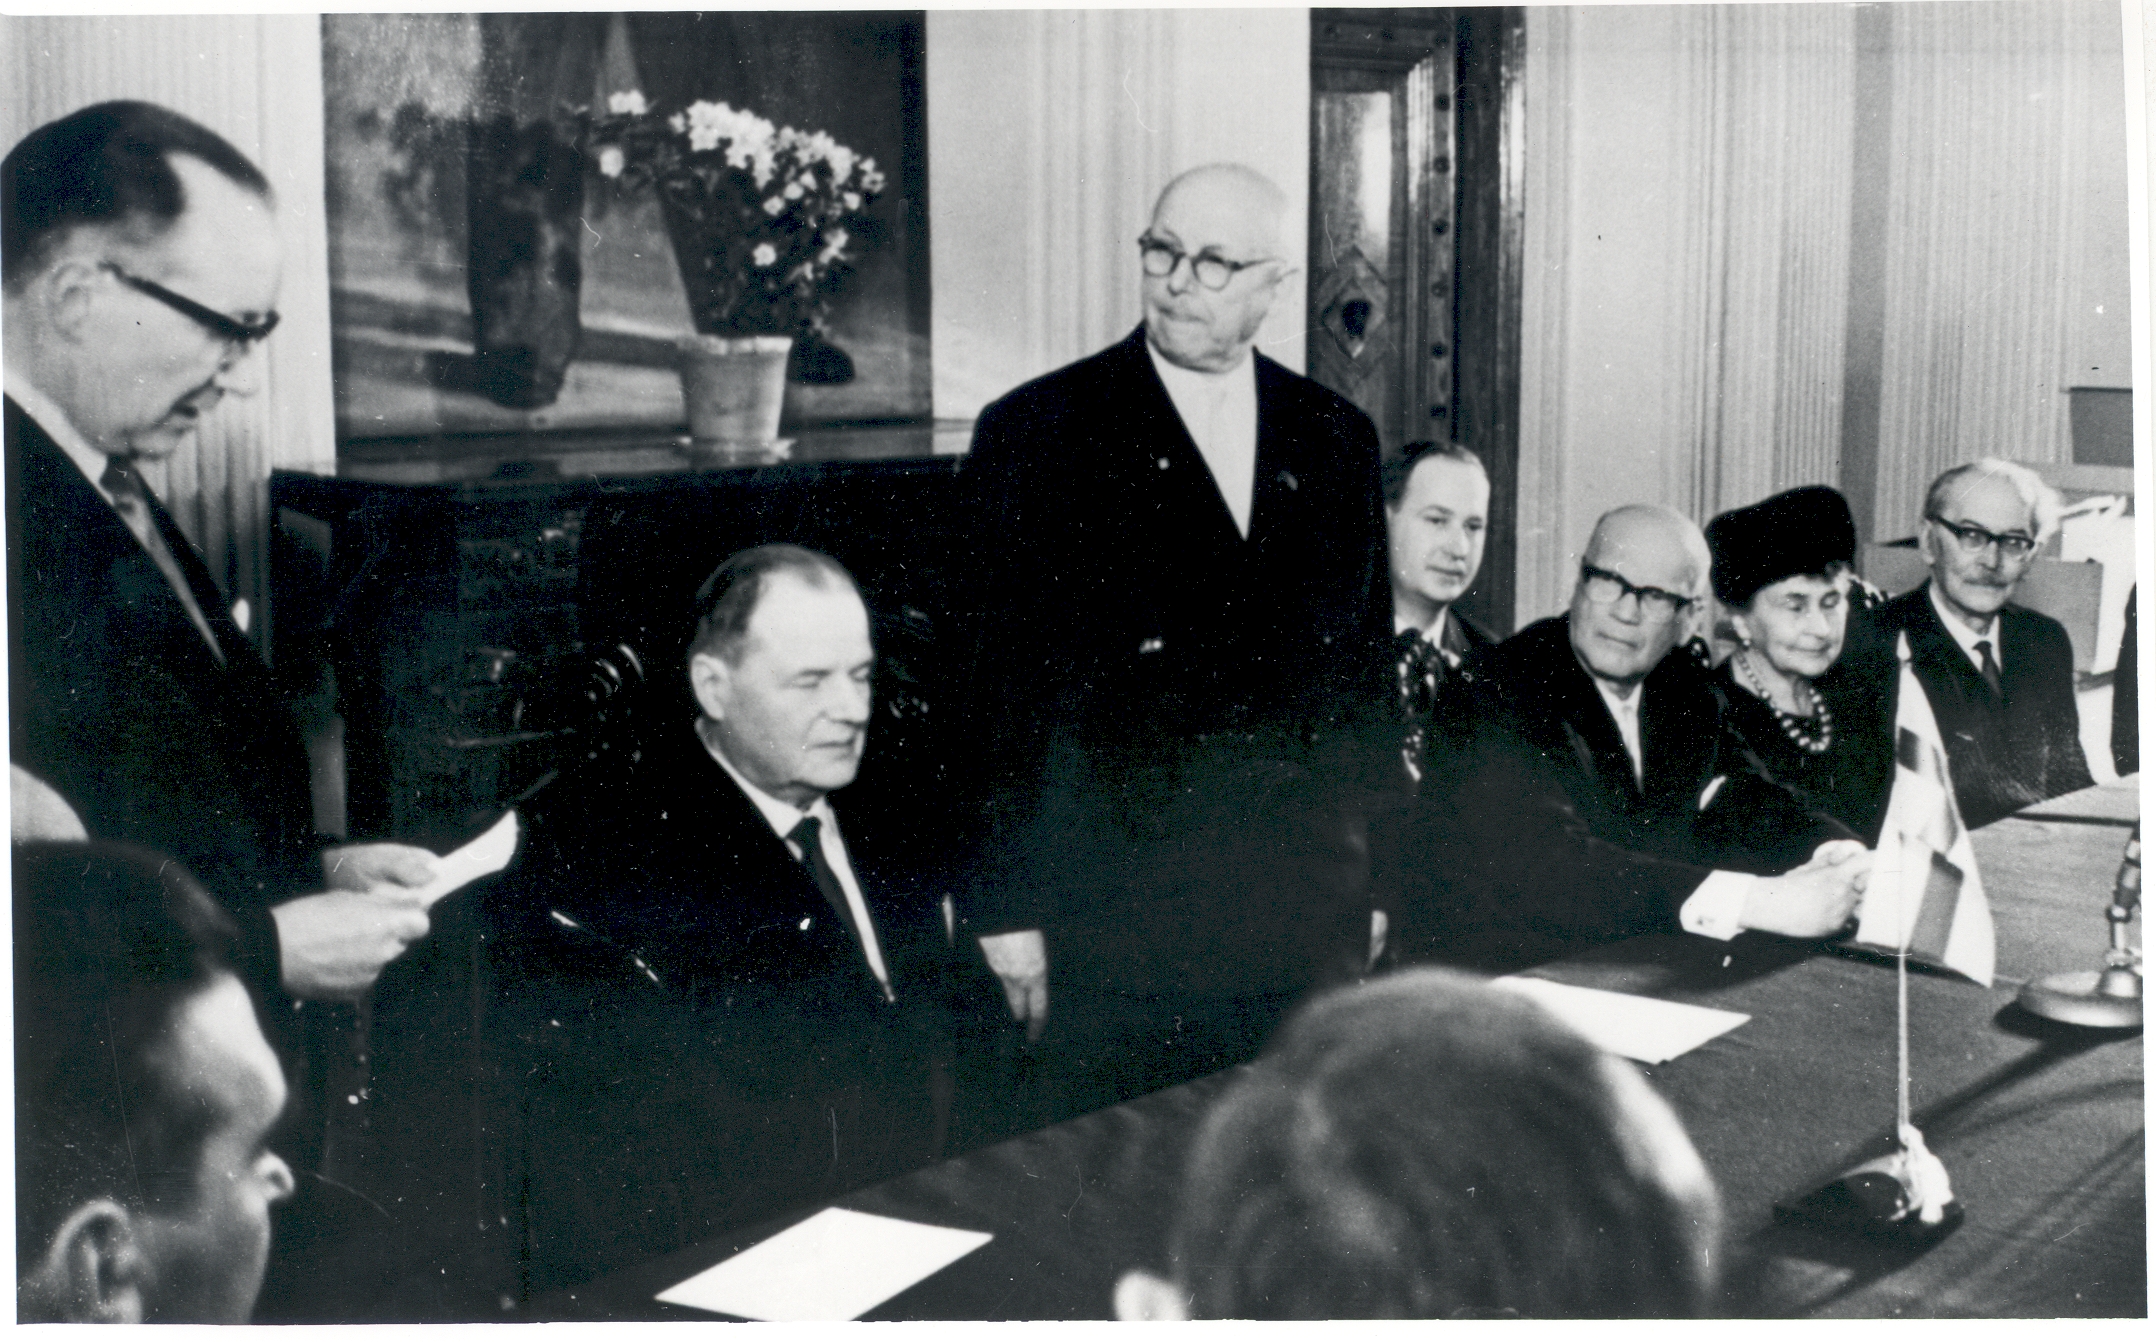 Finnish guests in Tallinn in 1964. From the right: 1) Friedebert Tuglas, 2) Sylvi Kekkonen